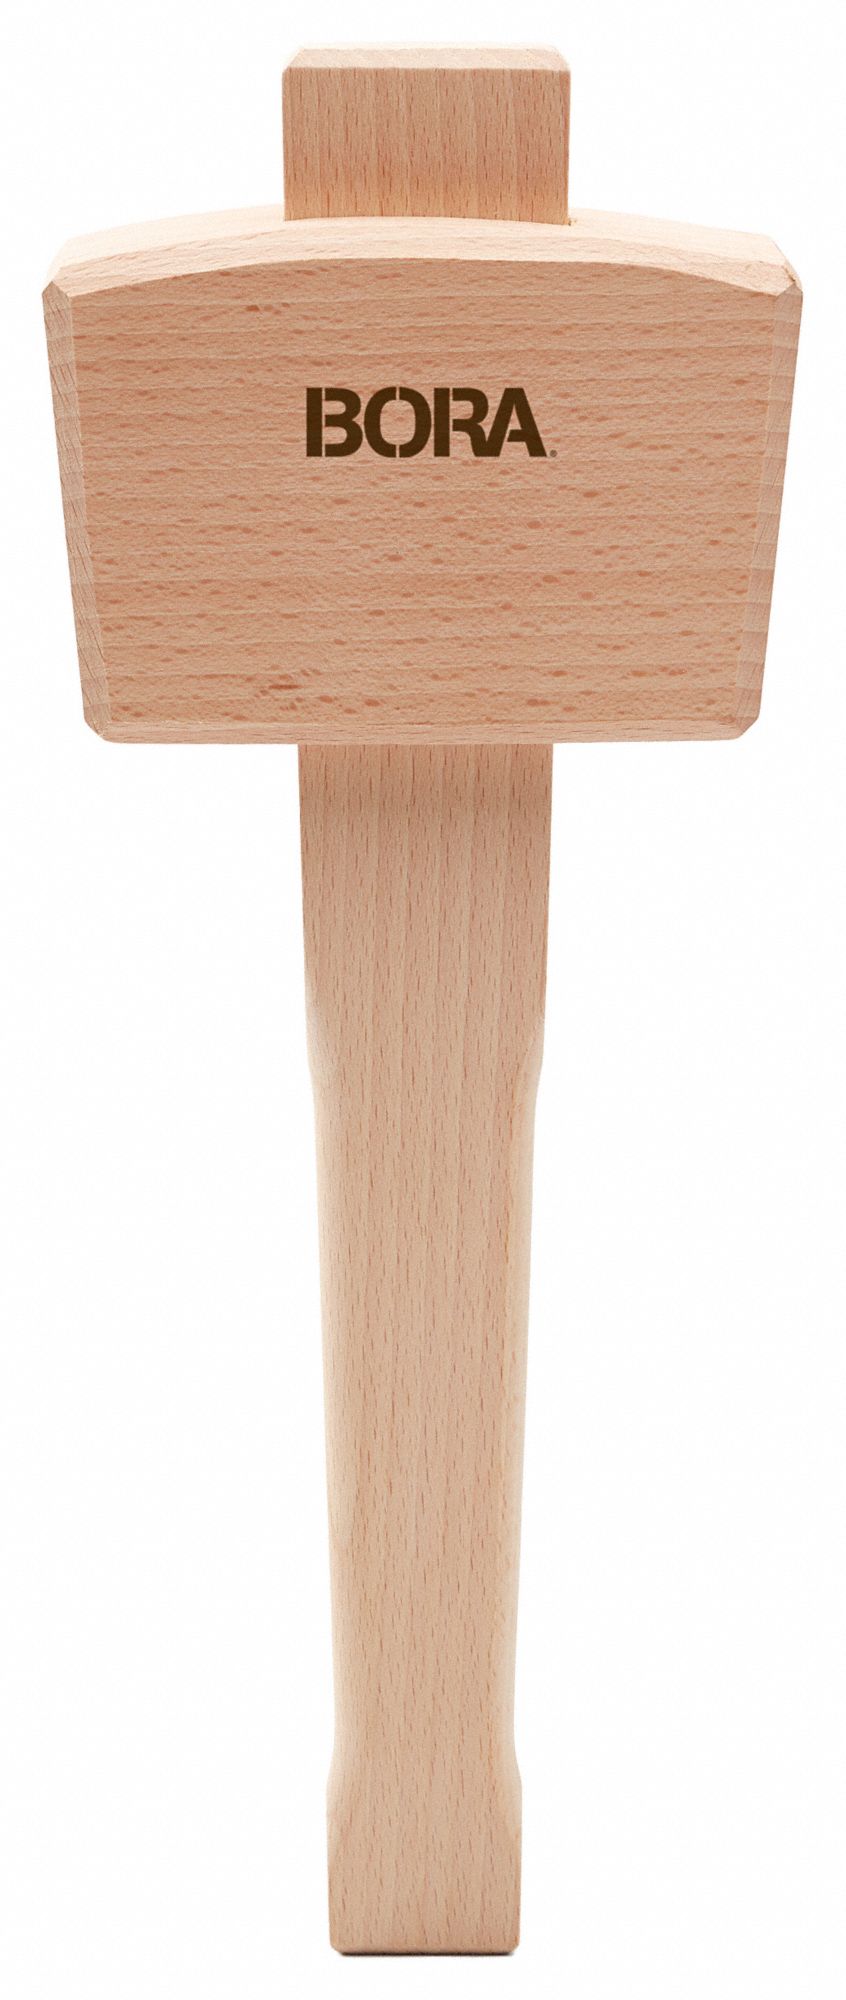 Wooden Mallet,15 oz Head Weight,Beechwood Handle Material